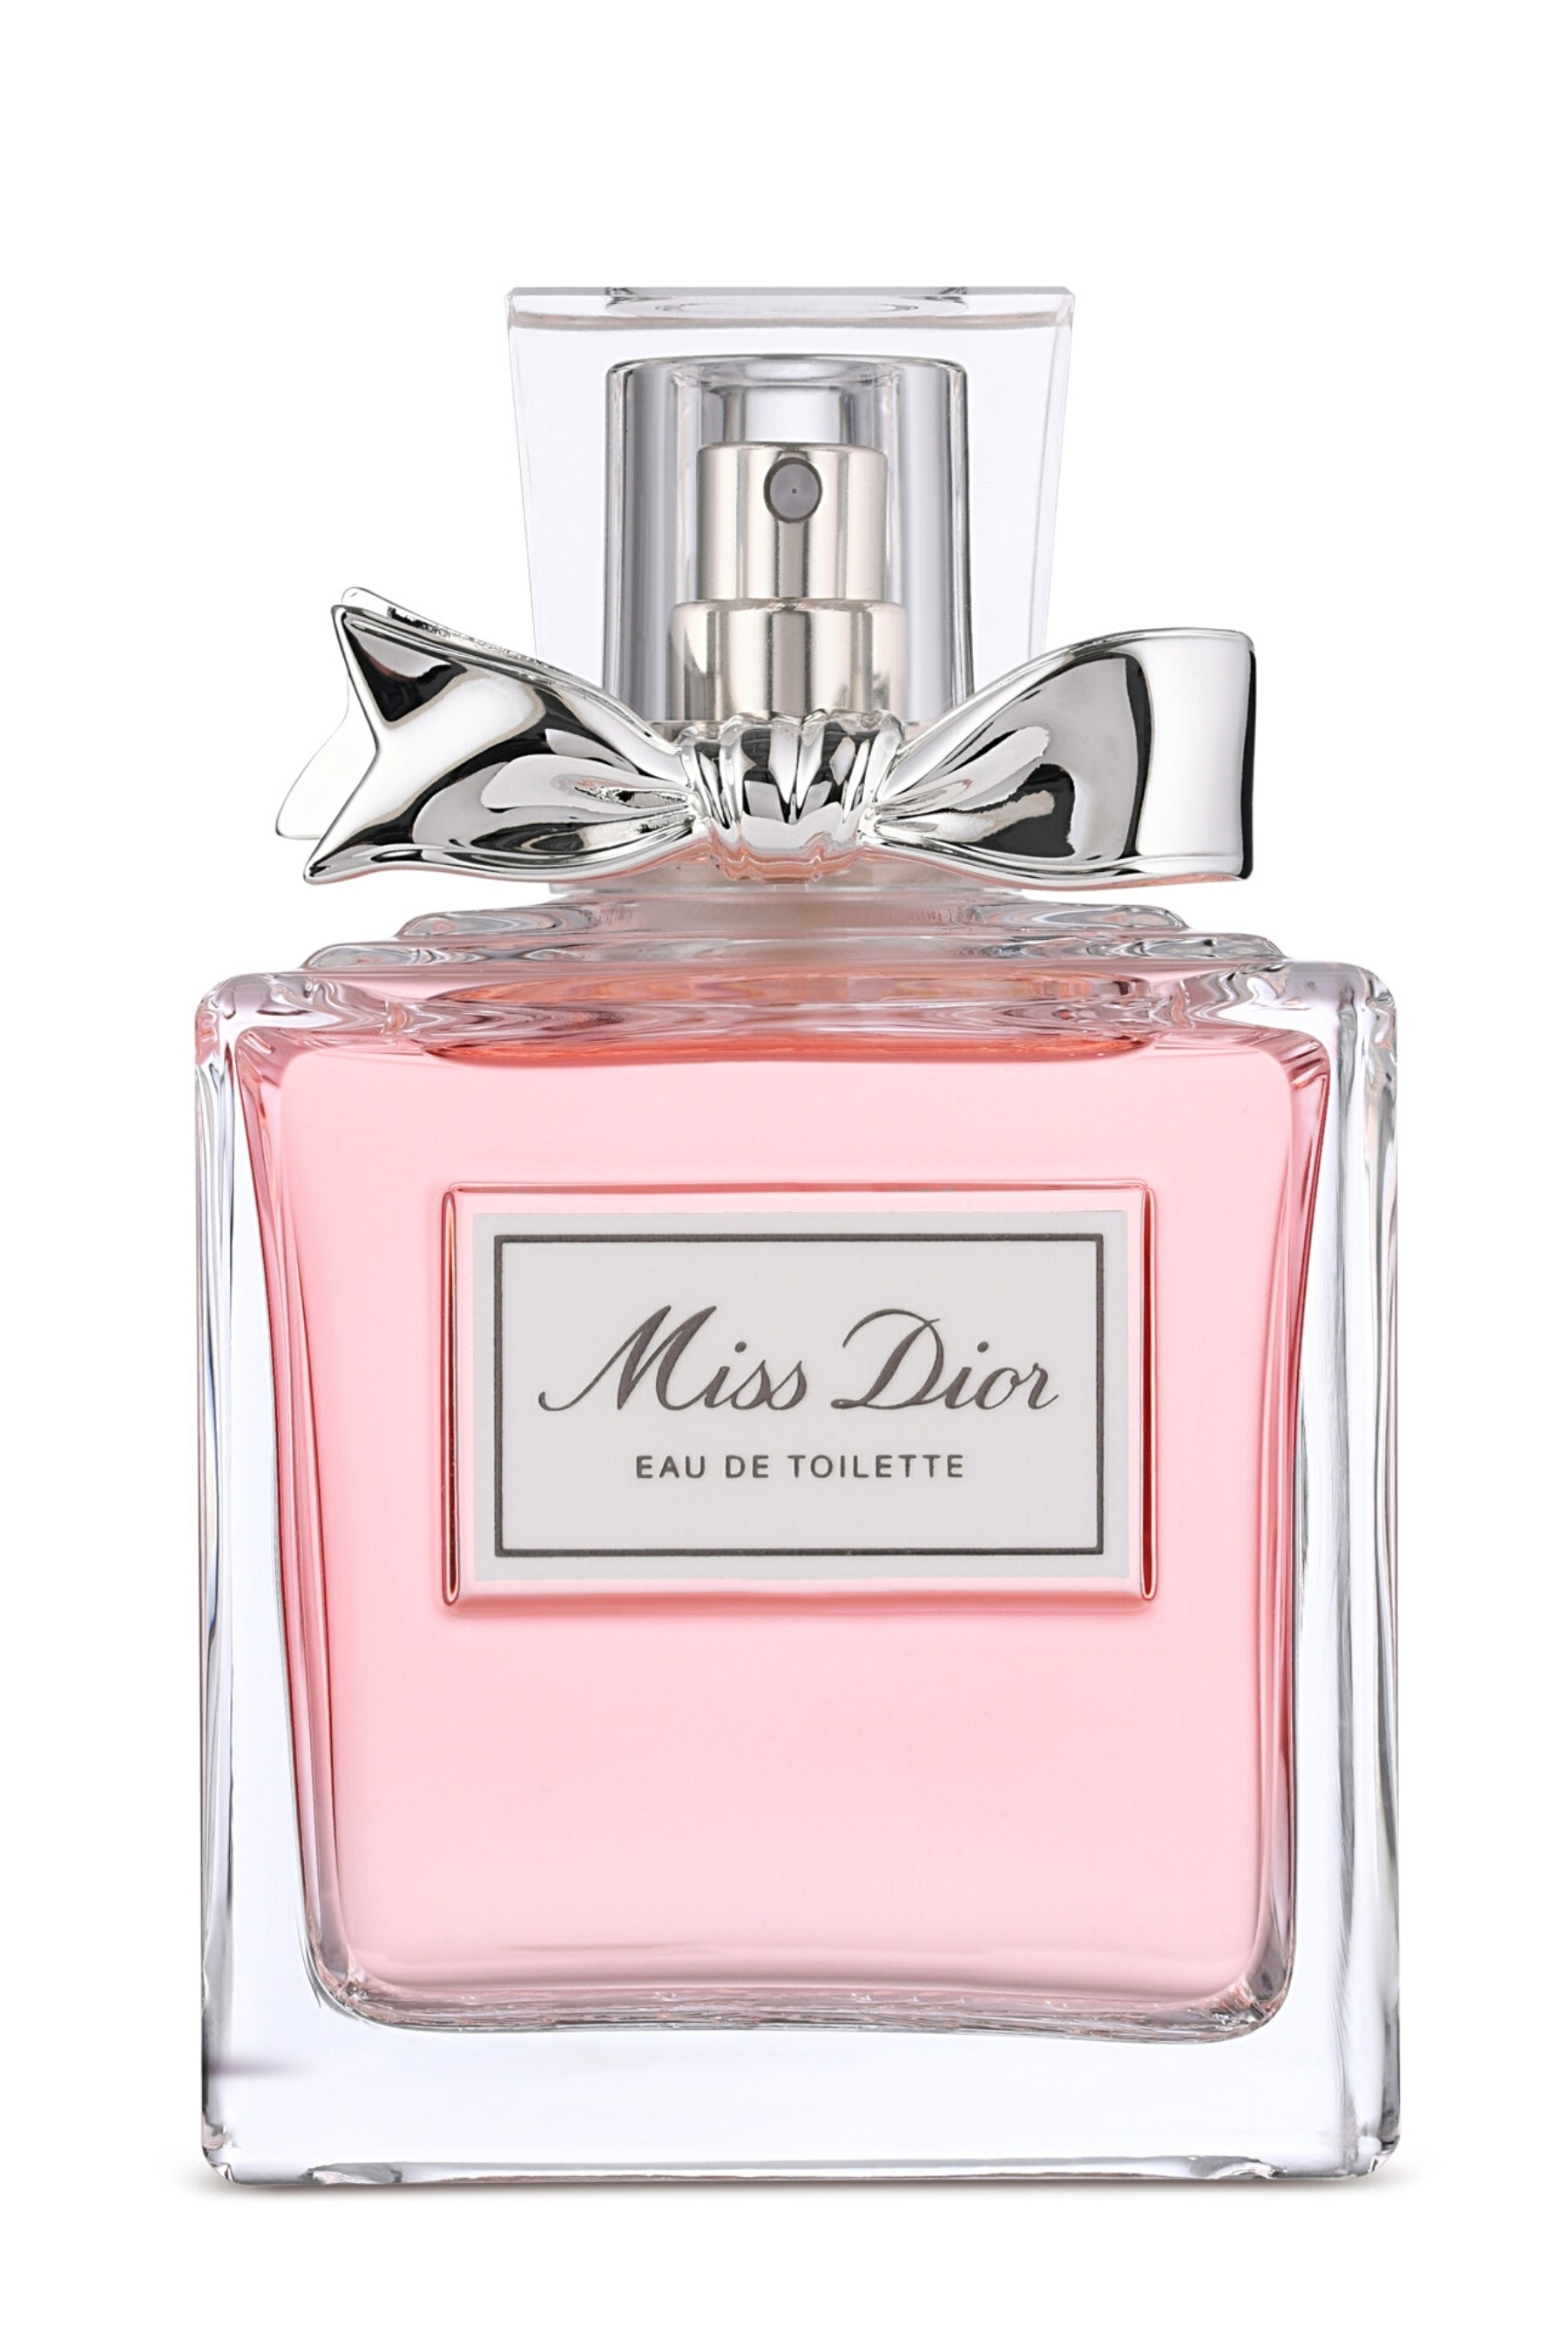 Miss Dior Eau de Parfum RollerPearl 20 ml Travel Fragrance  DIOR